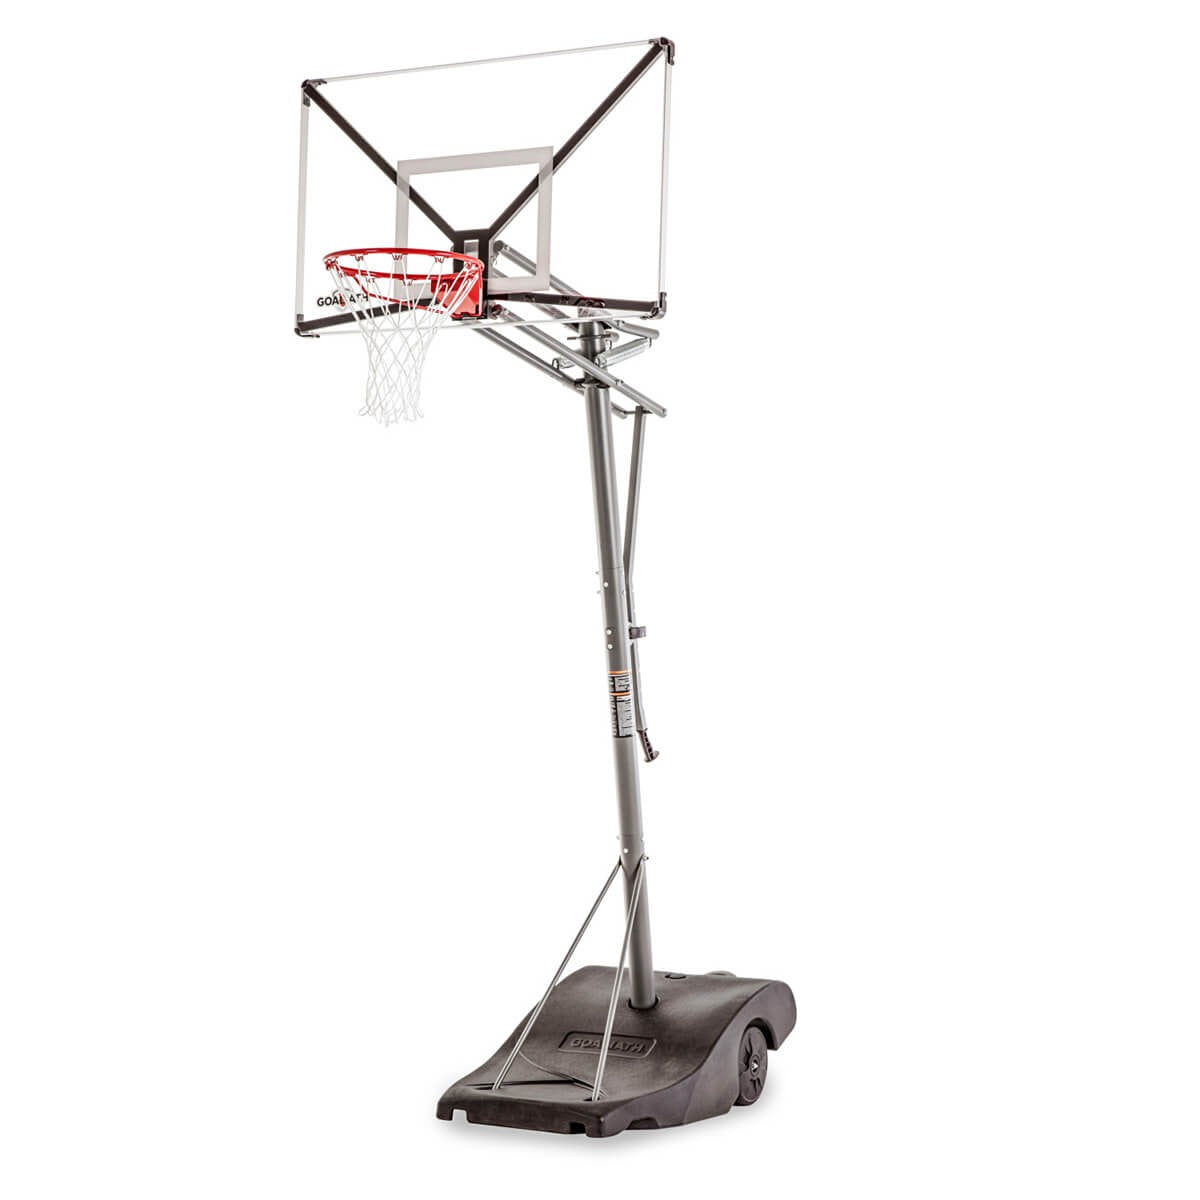 Goaliath GoTek54 Portable Basketball Hoop